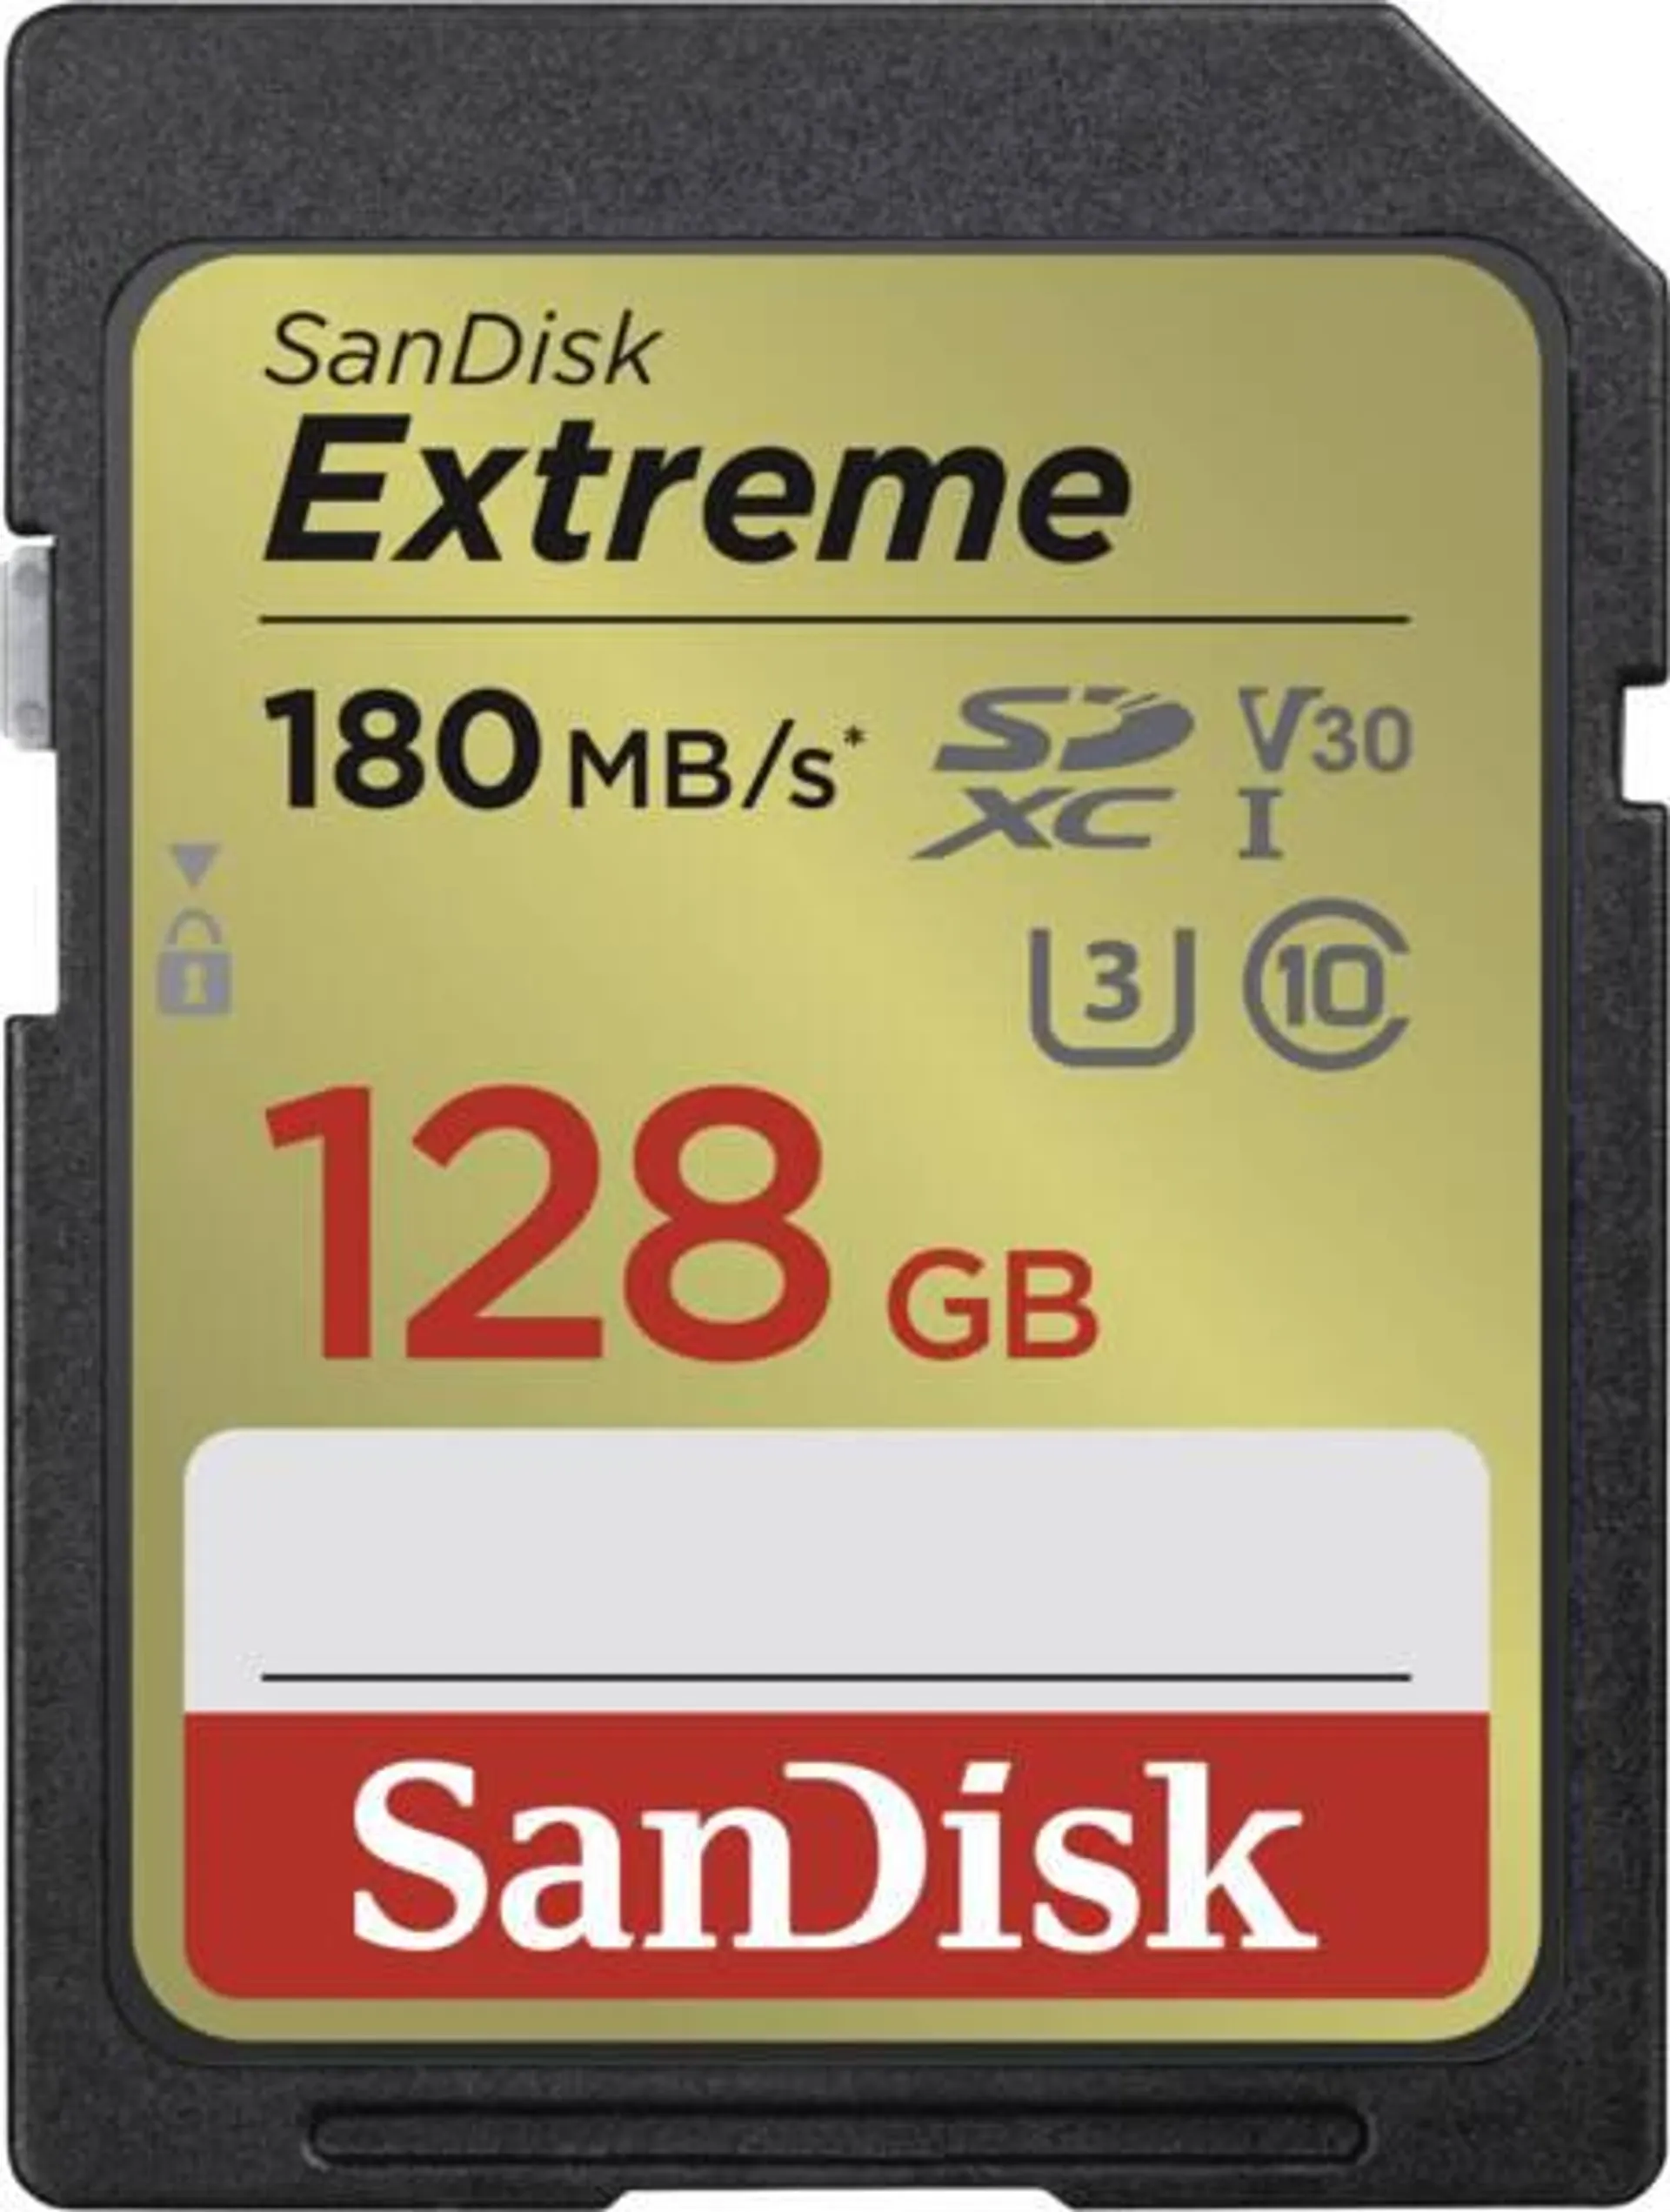 Extreme SDXC 128GB 180MB/s Class 10 UHS-I U3